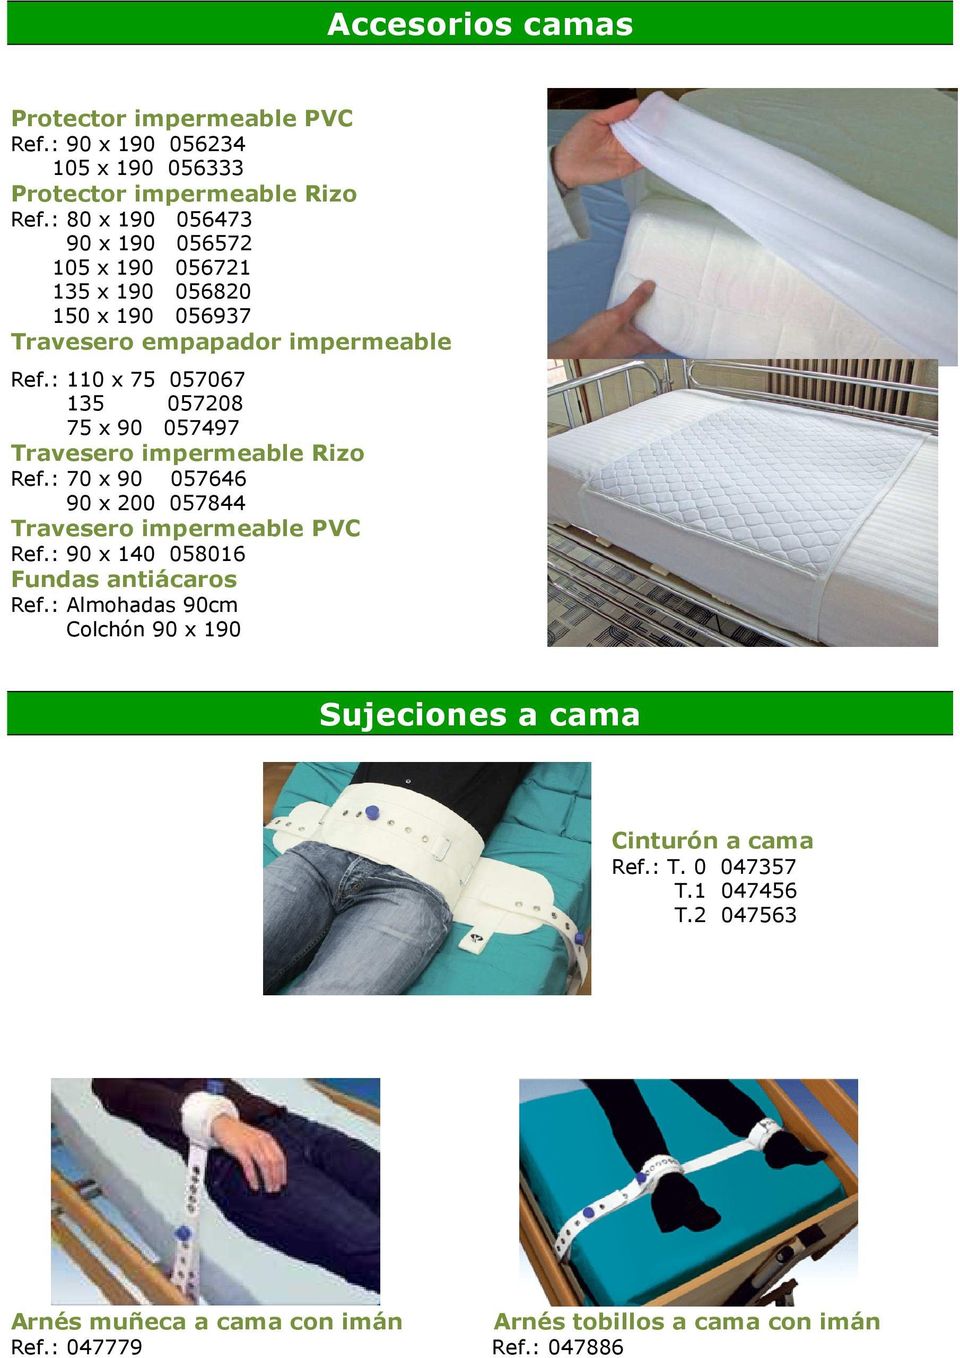 : 110 x 75 057067 135 057208 75 x 90 057497 Travesero impermeable Rizo Ref.: 70 x 90 057646 90 x 200 057844 Travesero impermeable PVC Ref.